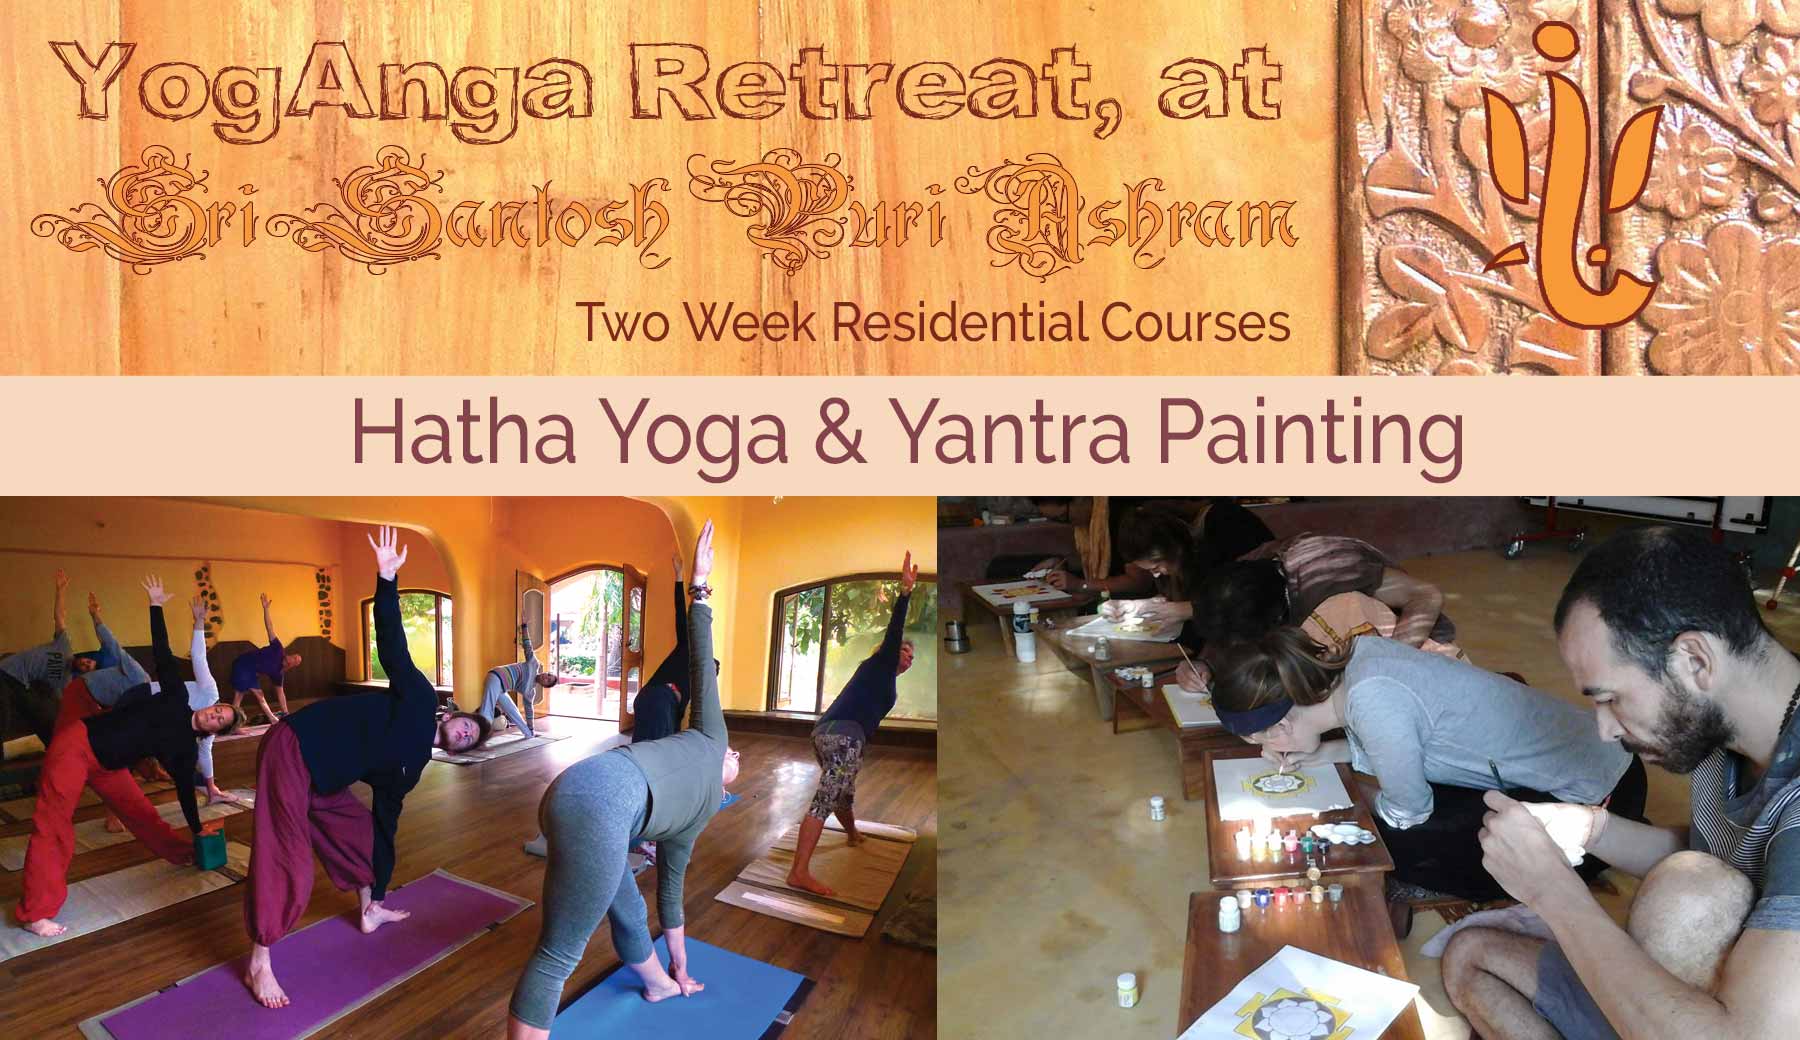 yoganga.org - YogAnga Retreat at Sri Santosh Puri Ashram - Hatha Yoga & Yantra Painting two week Residential Course - asana, pranayam, sacred geometry, meditation, mantra